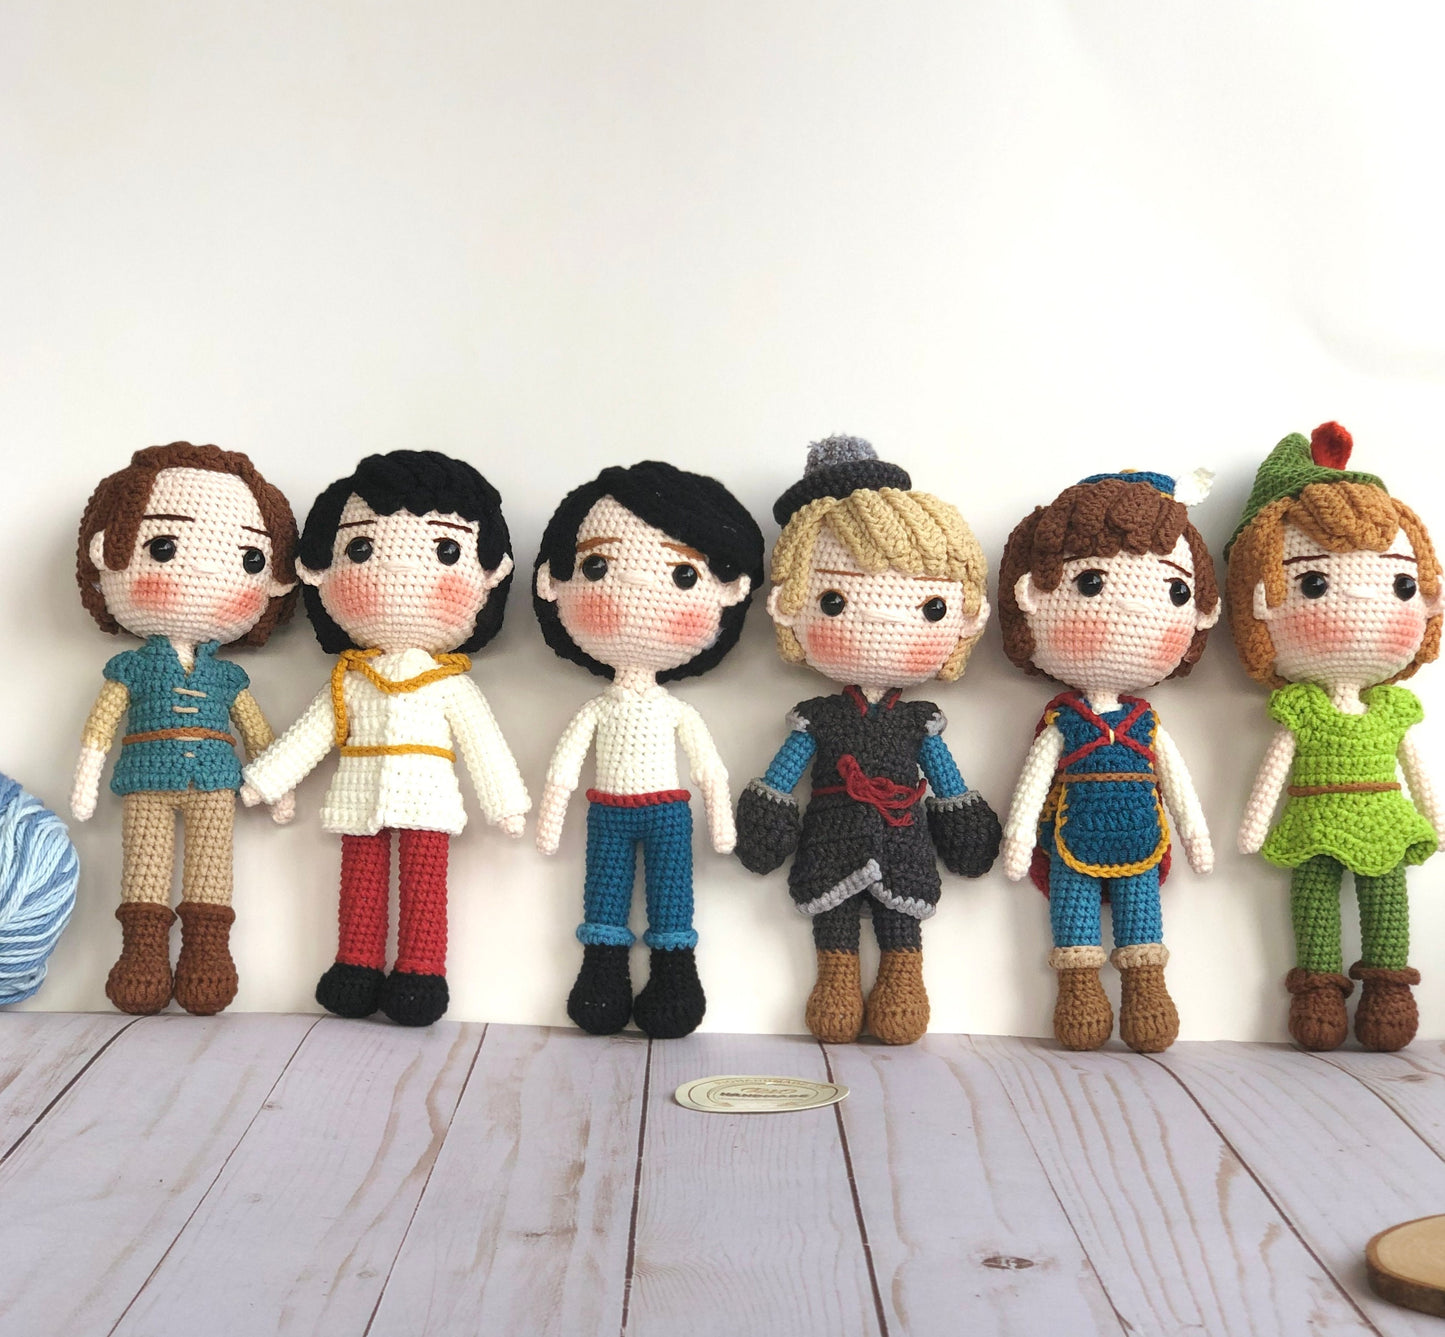 Handmade  animator Prince doll crochet, amigurumi, cute, soft toy for baby, toddler, kid, adult hobby